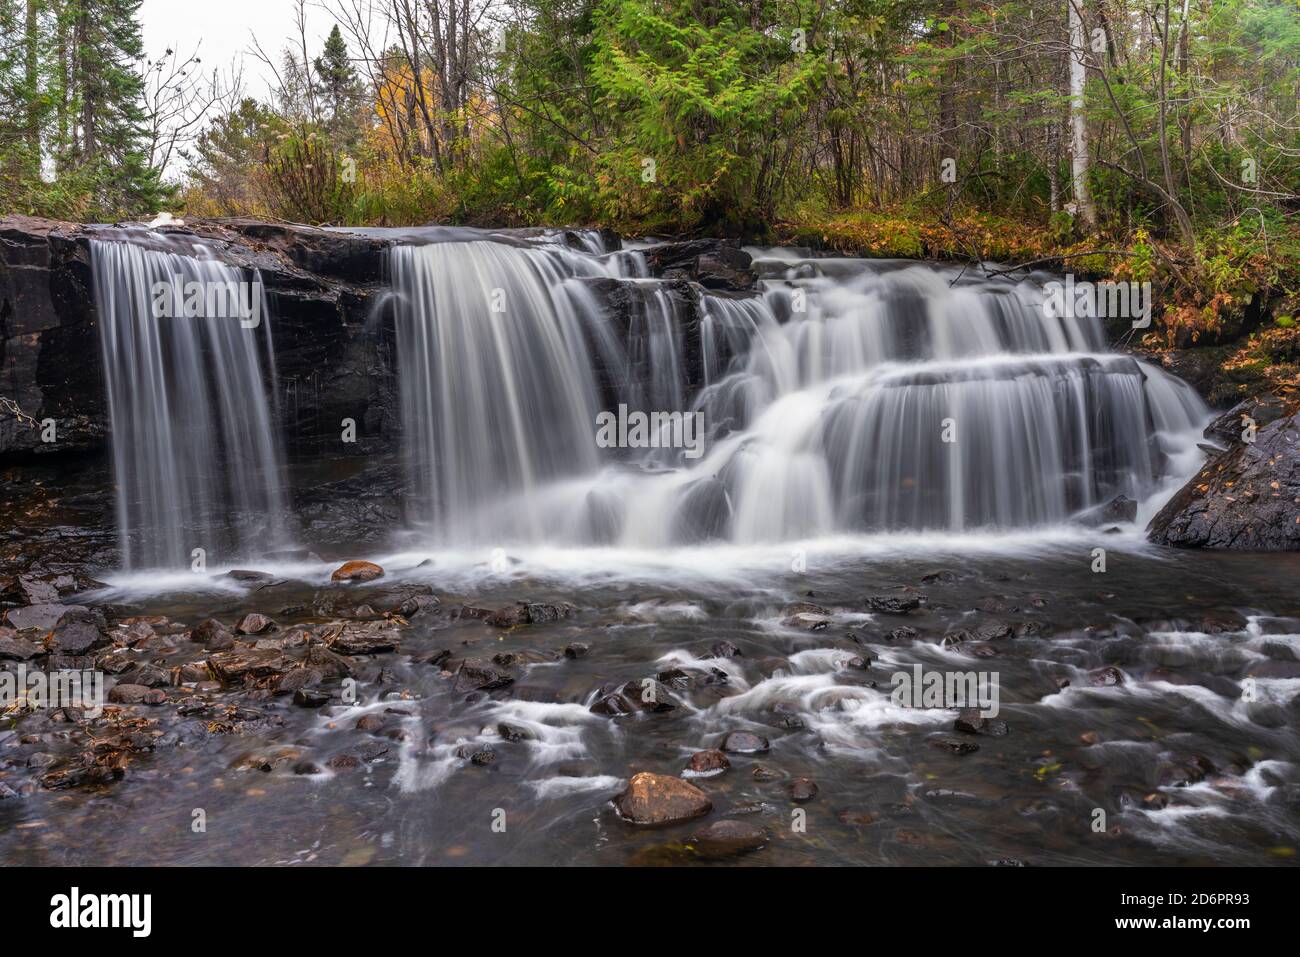 Raleigh Falls near Ignace, Ontario, Canada. Stock Photo